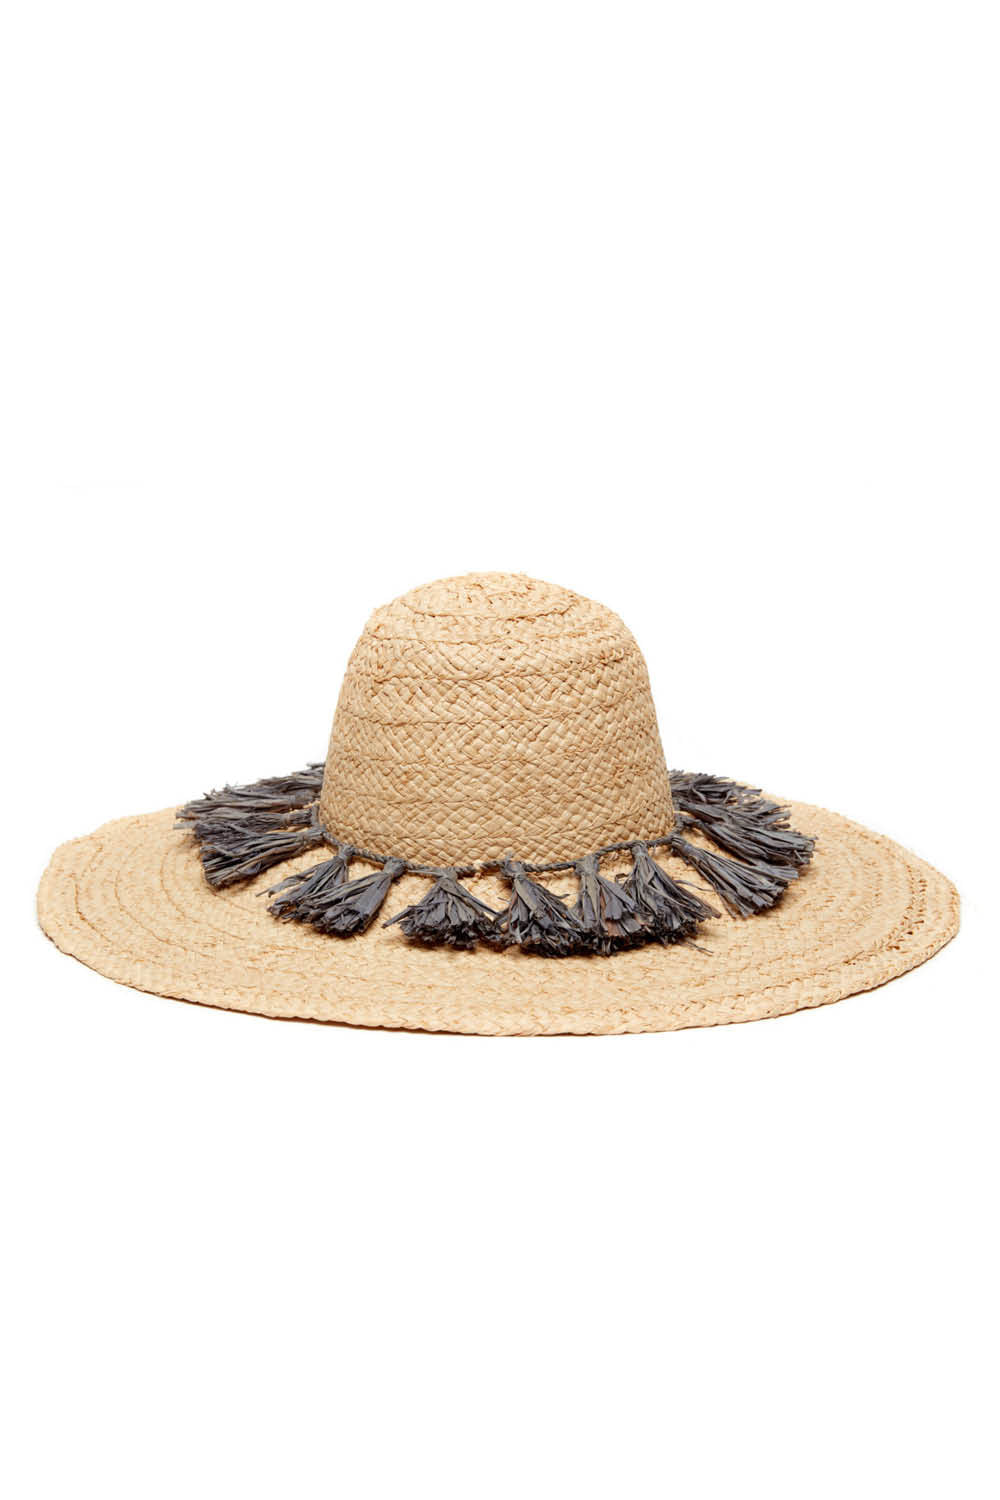 Paloma Hat in natural/dove